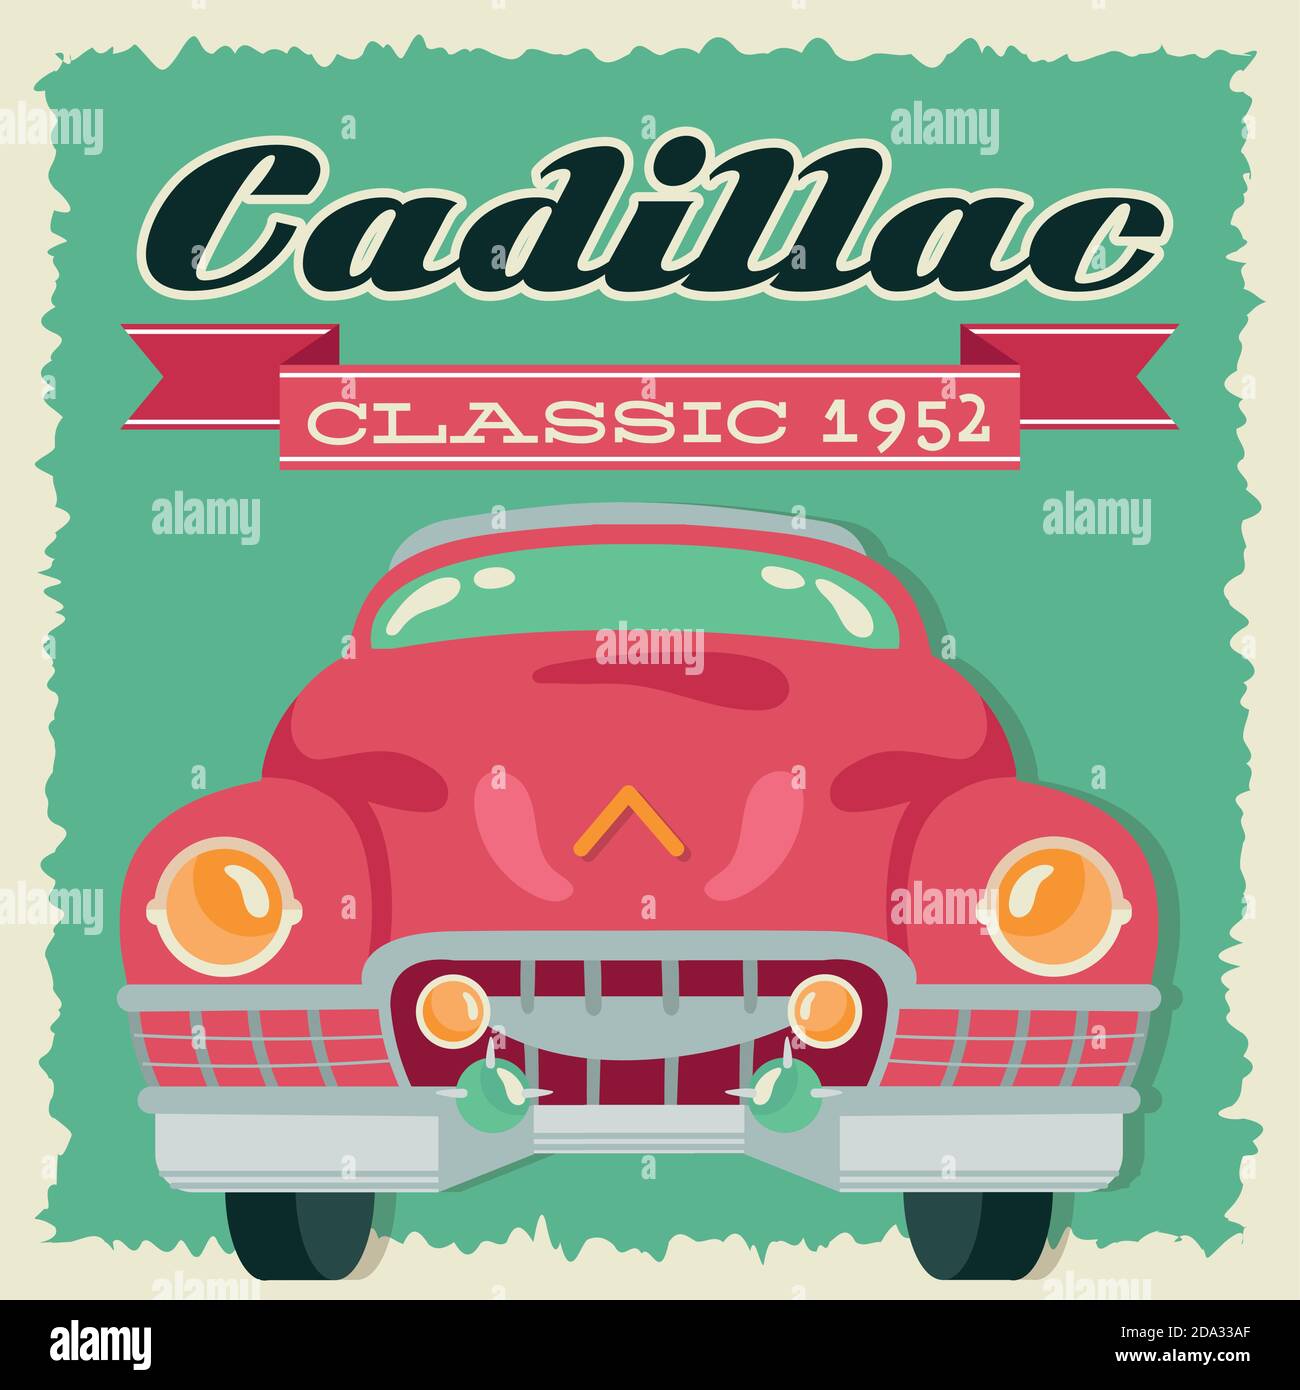 cadillac Poster Retro-Stil mit Auto und Jahr Vektor Illustration Design Stock Vektor